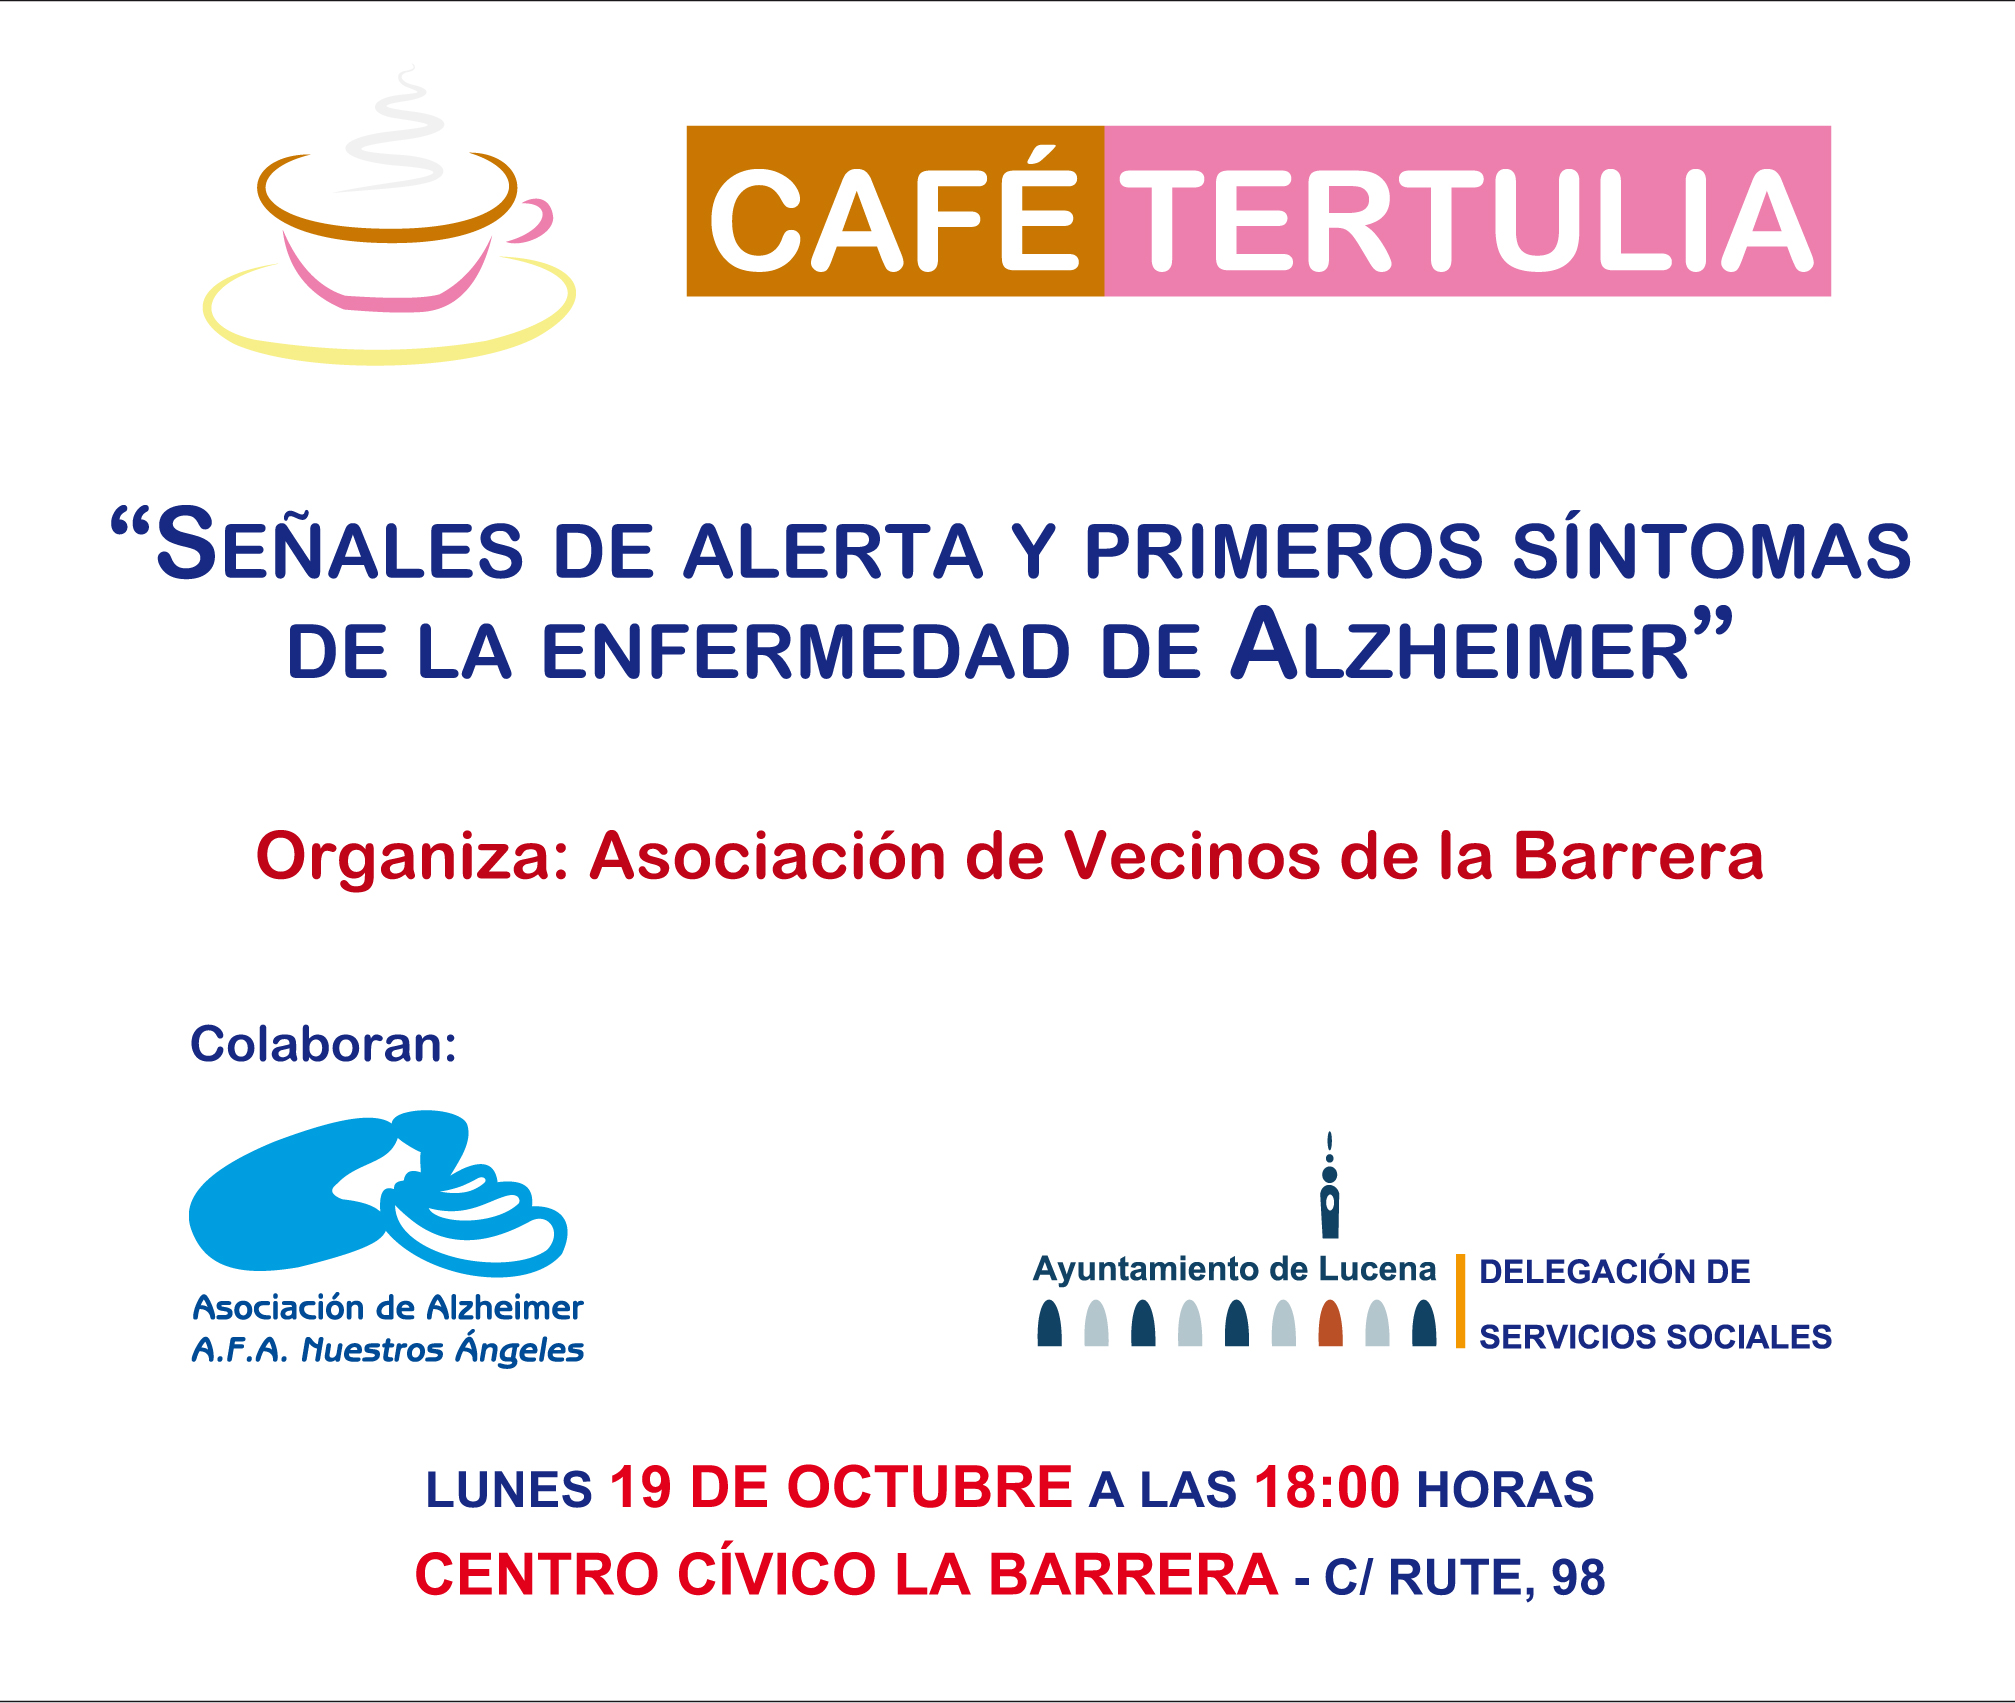 CAFÉ TERTULIA CENTRO CÍVICO LA BARRERA